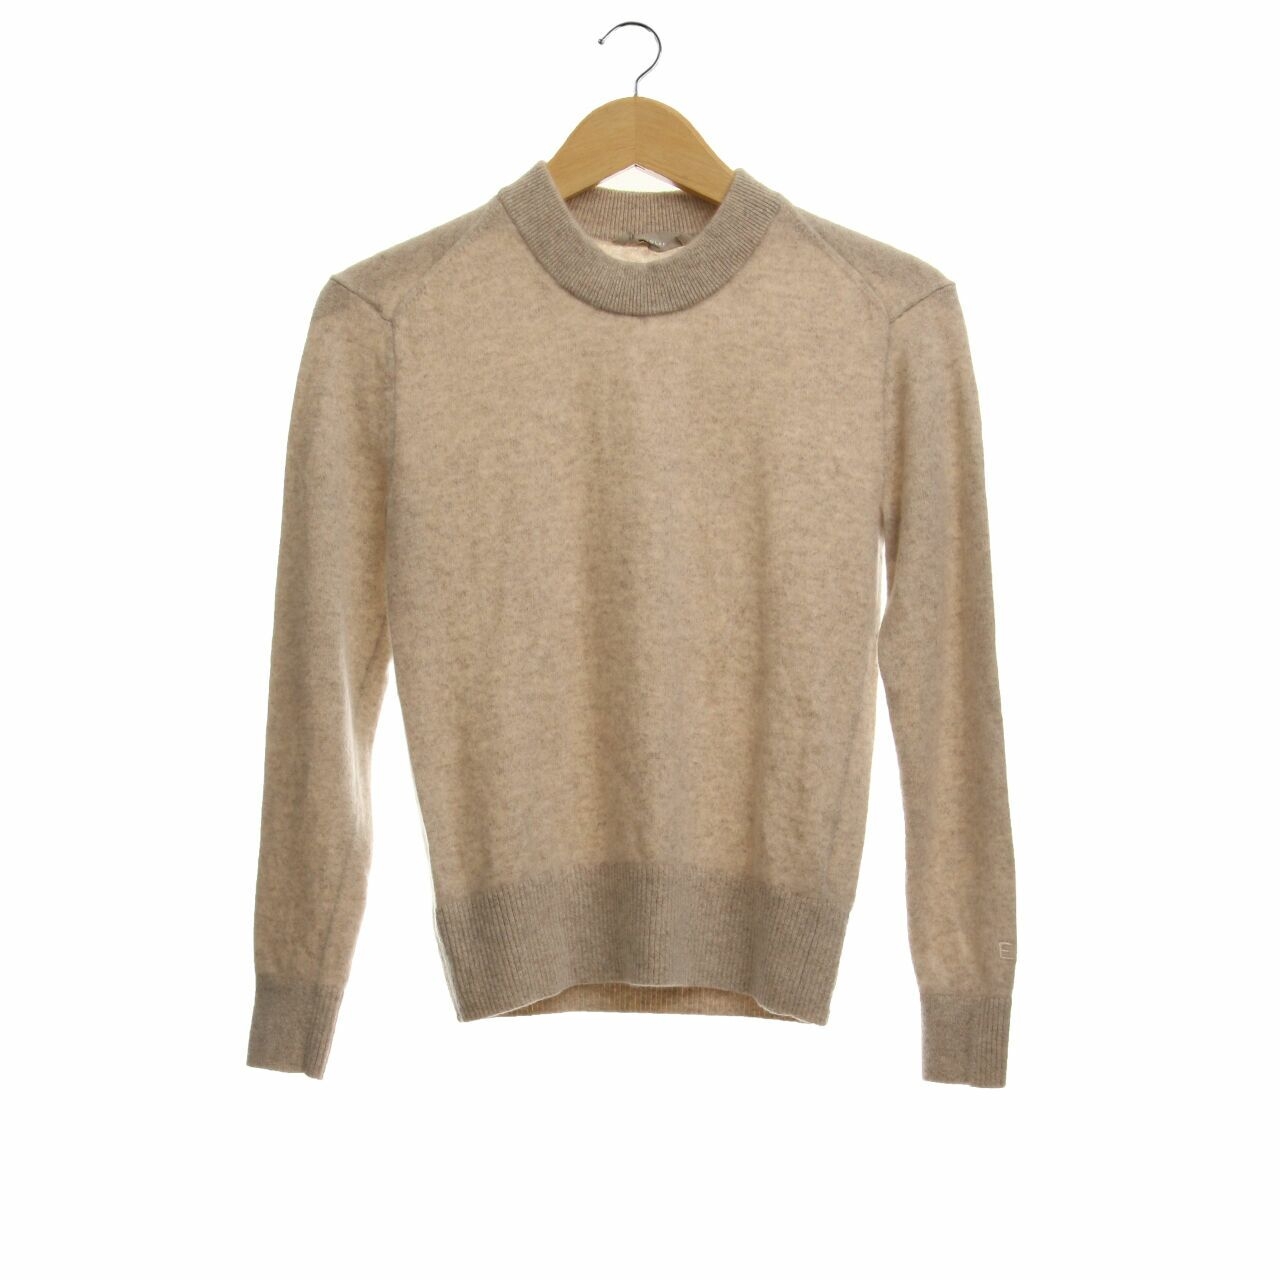 Everlane Light Grey Sweater